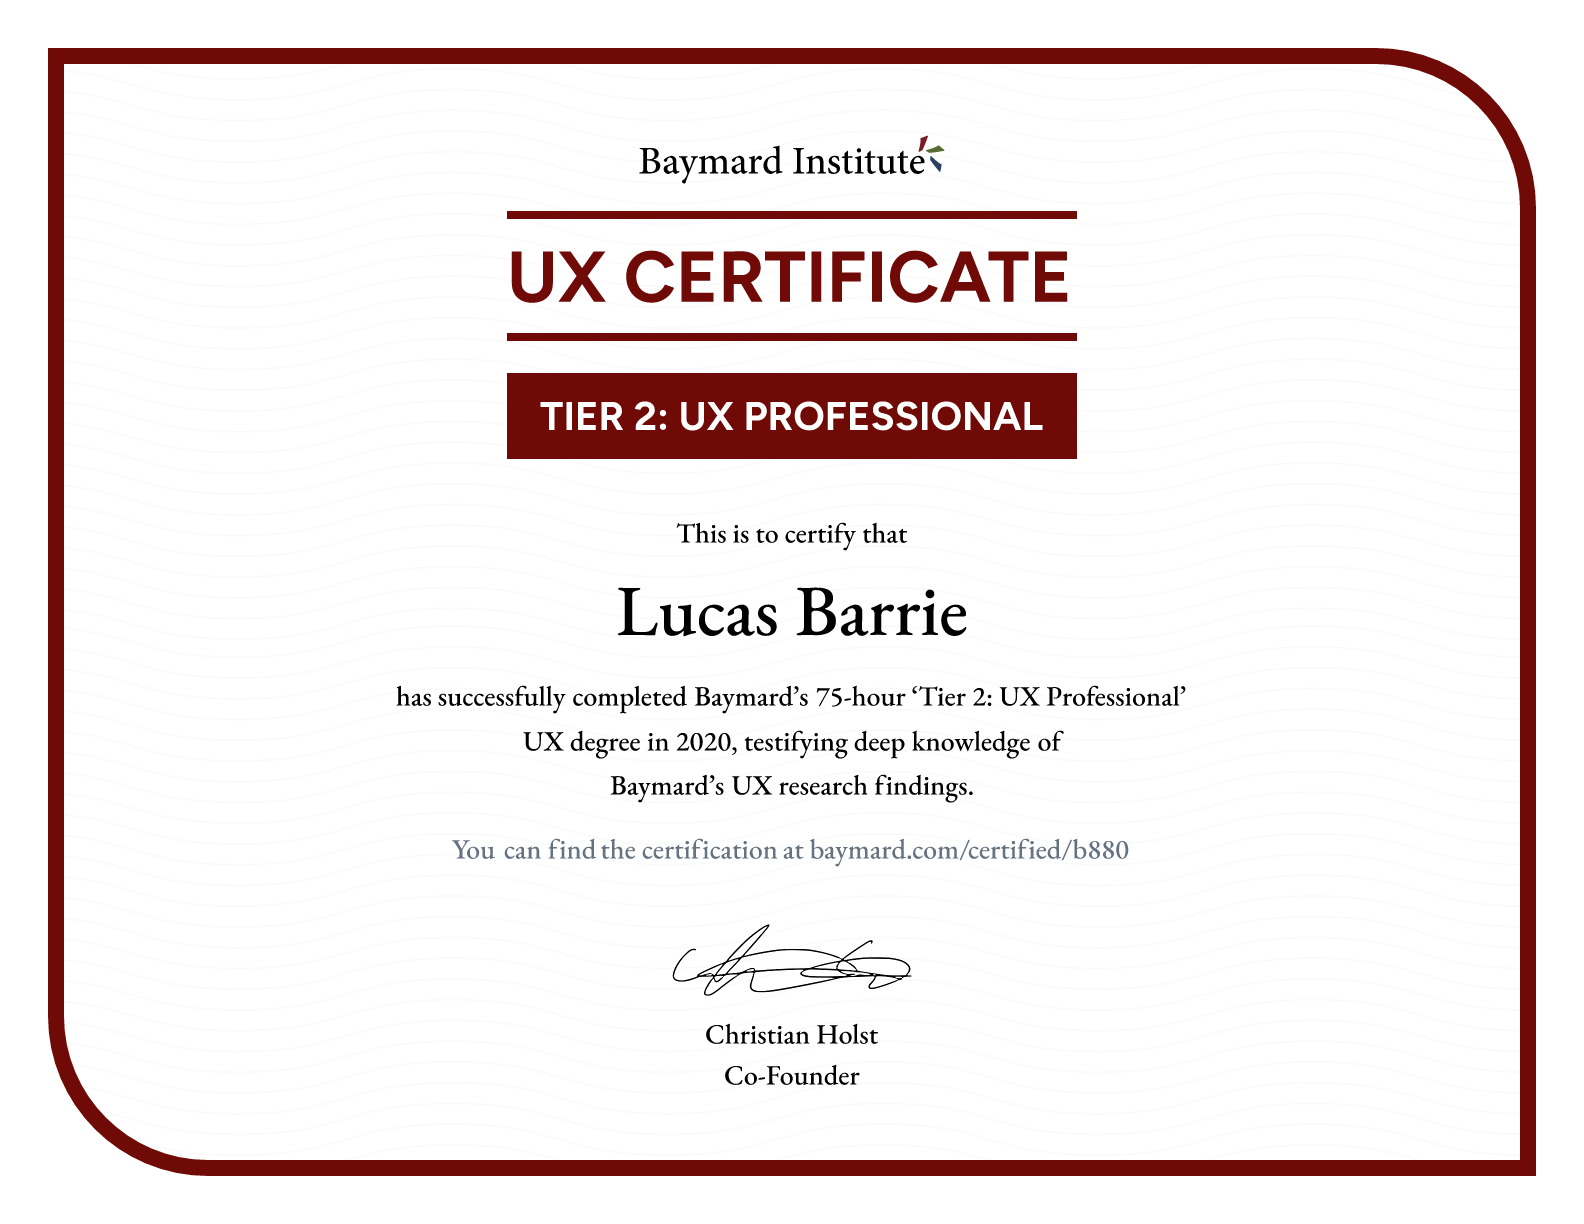 Lucas Barrie’s certificate